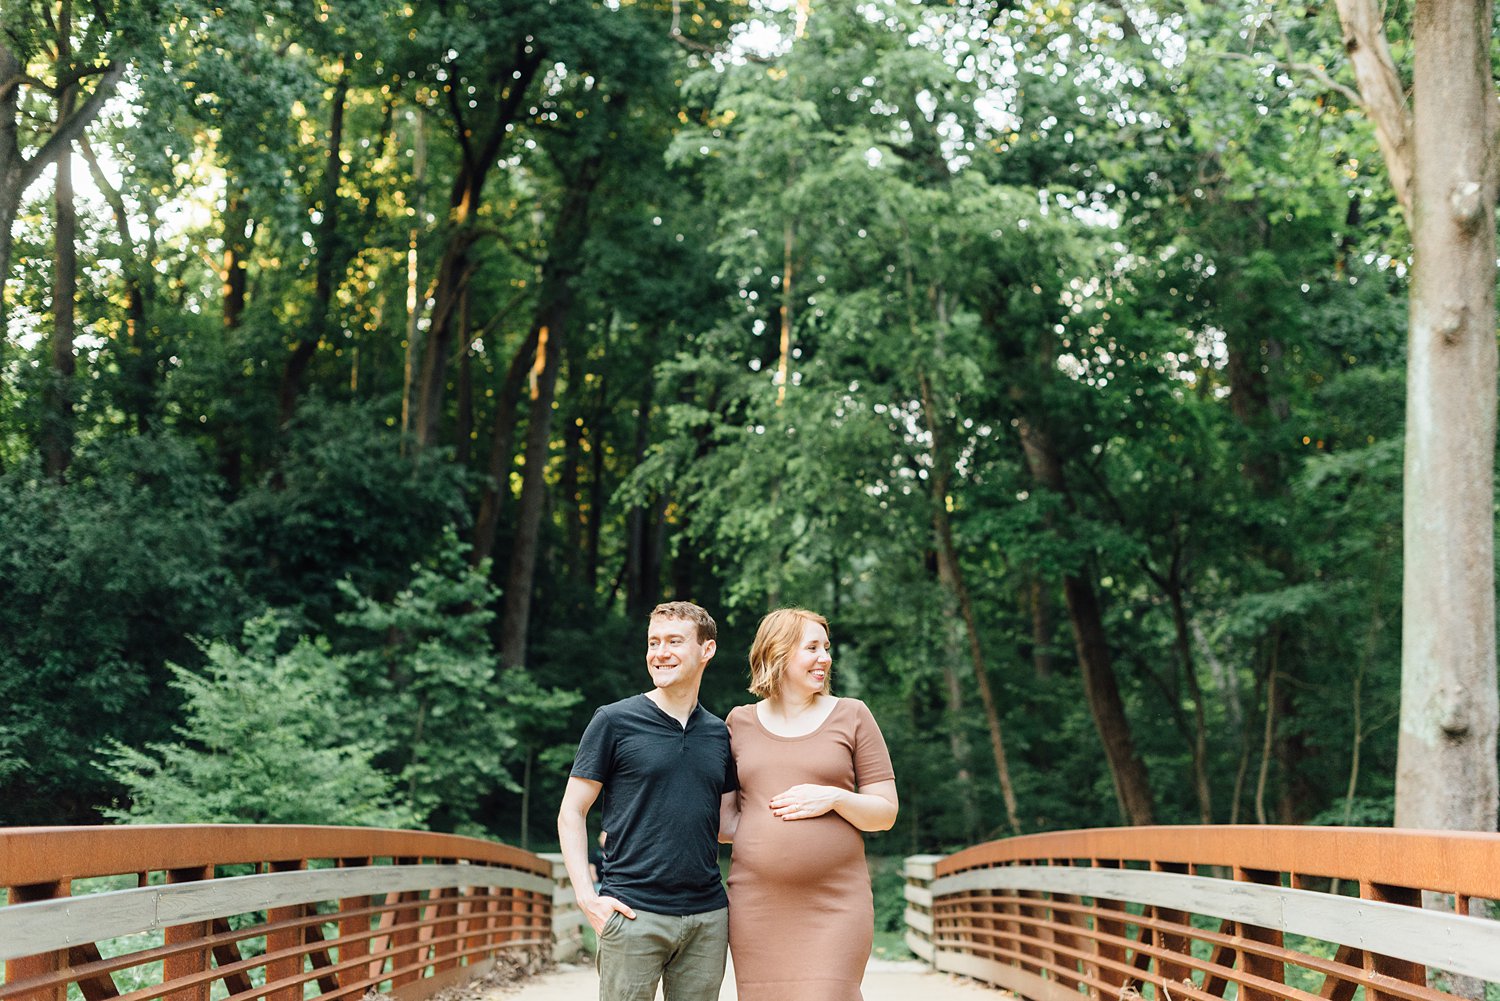 Holly + Michael - Takoma Park Maternity Session - Maryland Family Photographer - Alison Dunn Photography